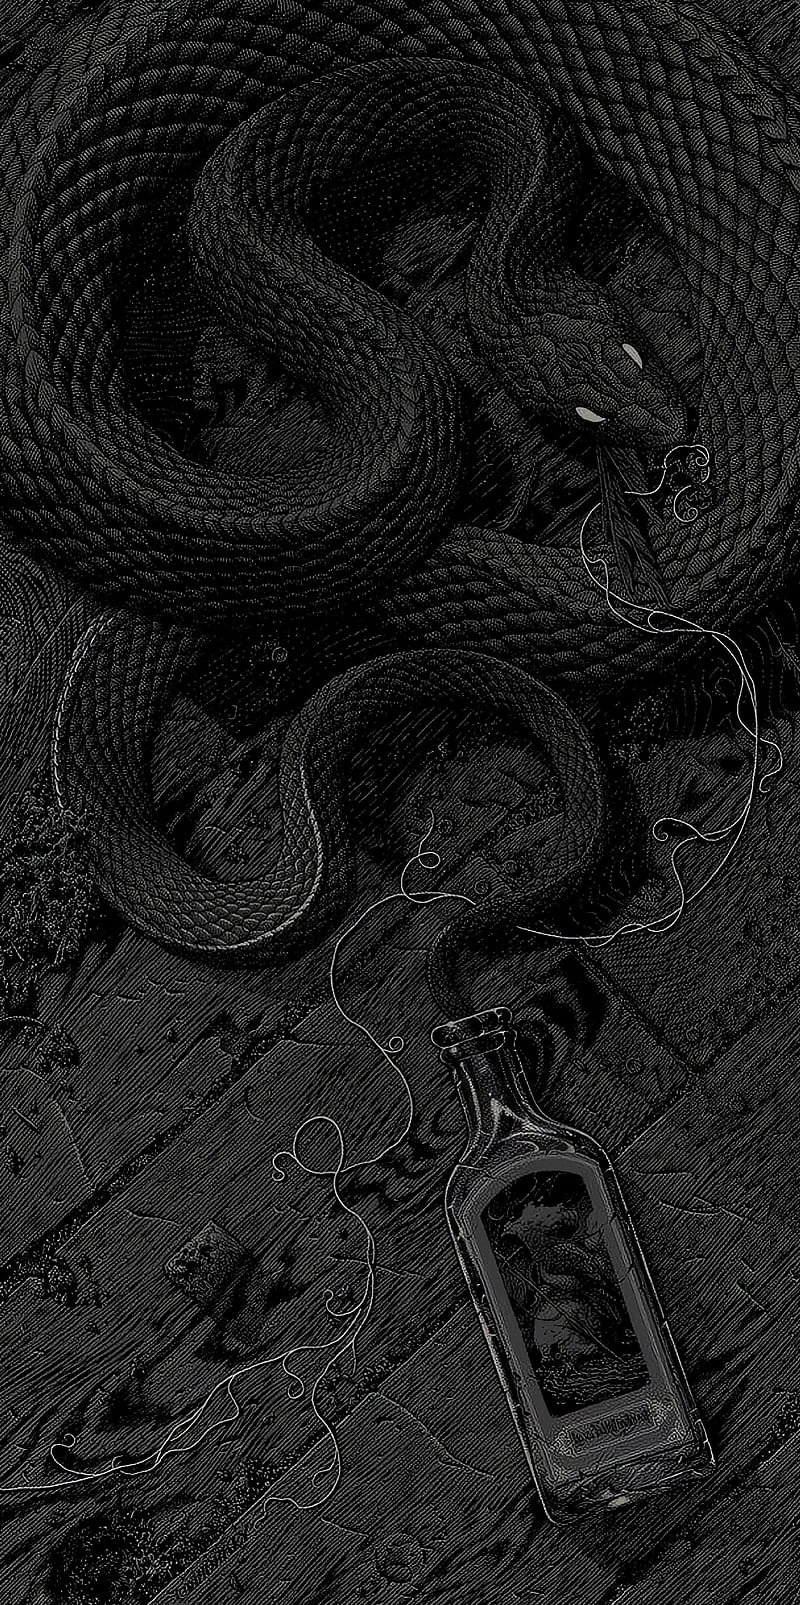 Black snakeskin Stock Photos Royalty Free Black snakeskin Images   Depositphotos